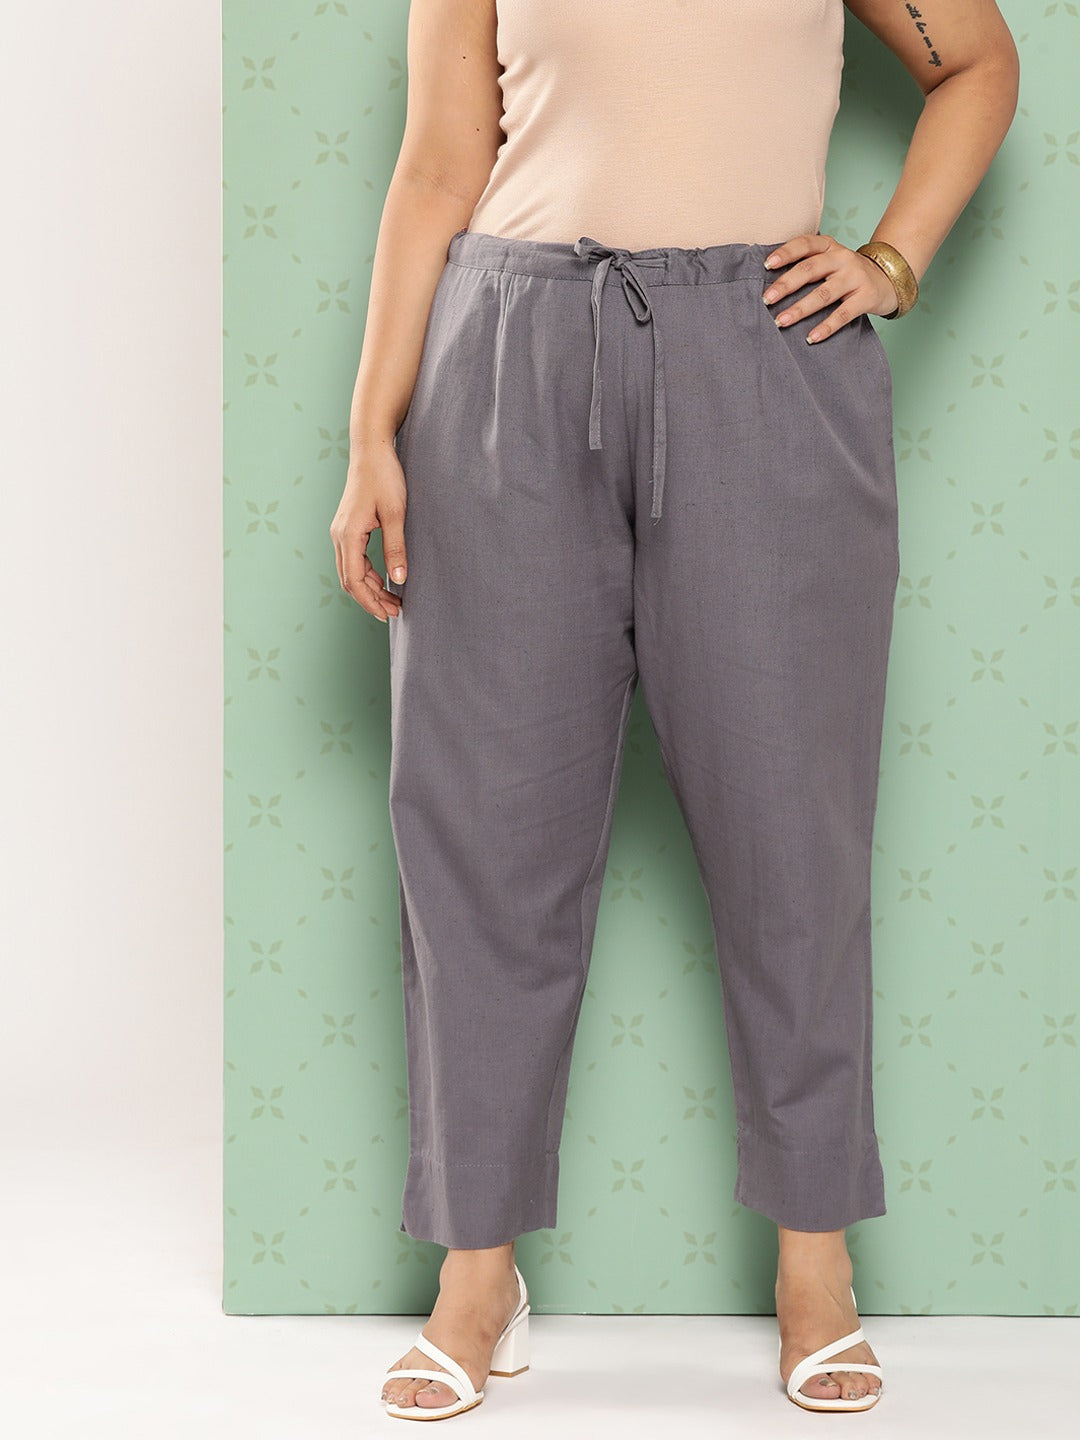 Women Plus Size Grey Cotton Ethnic Trousers-Yufta Store-4206PPNTGY3XL